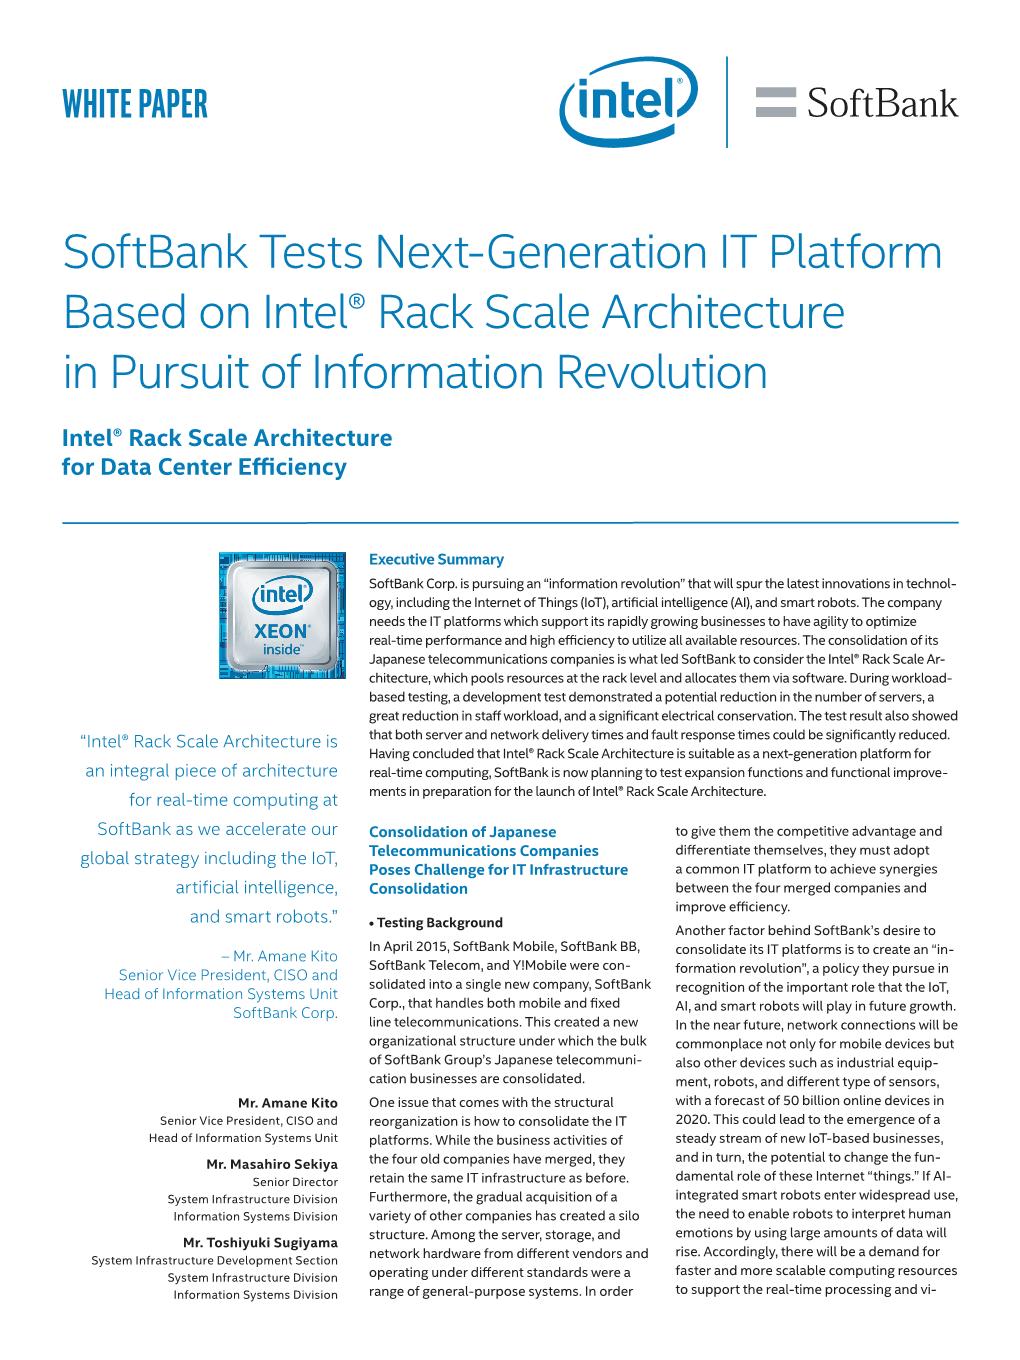 Softbank Tests Next-Gen IT Platform Based on Intel® Rack Scale